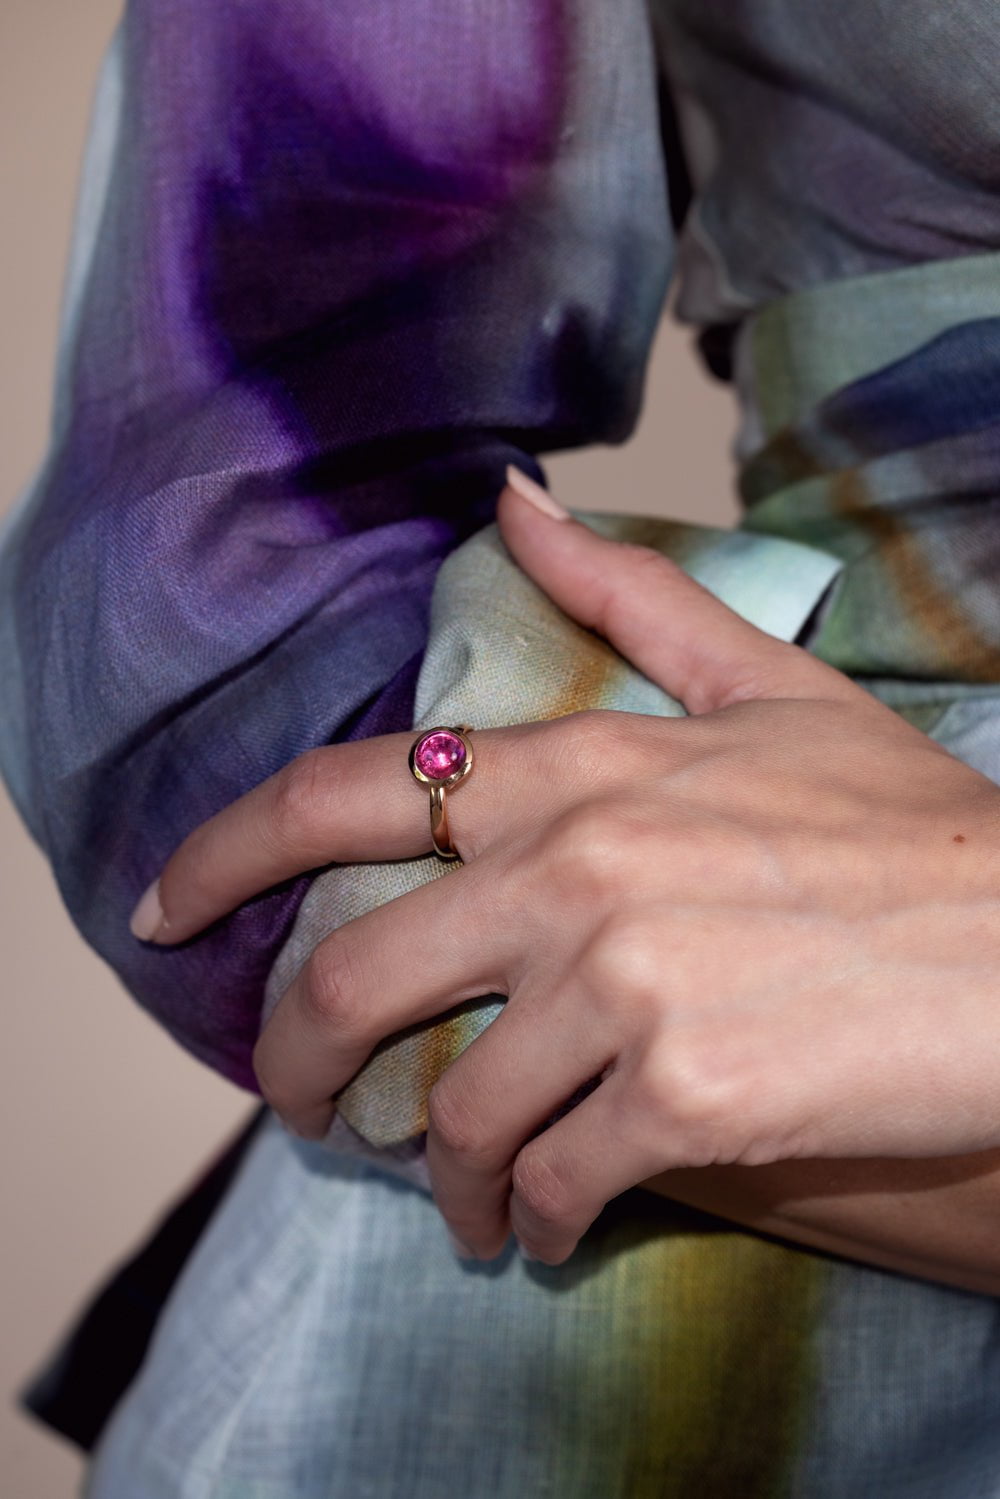 TAMARA COMOLLI-Pink Tourmaline Small Bouton Ring-ROSE GOLD